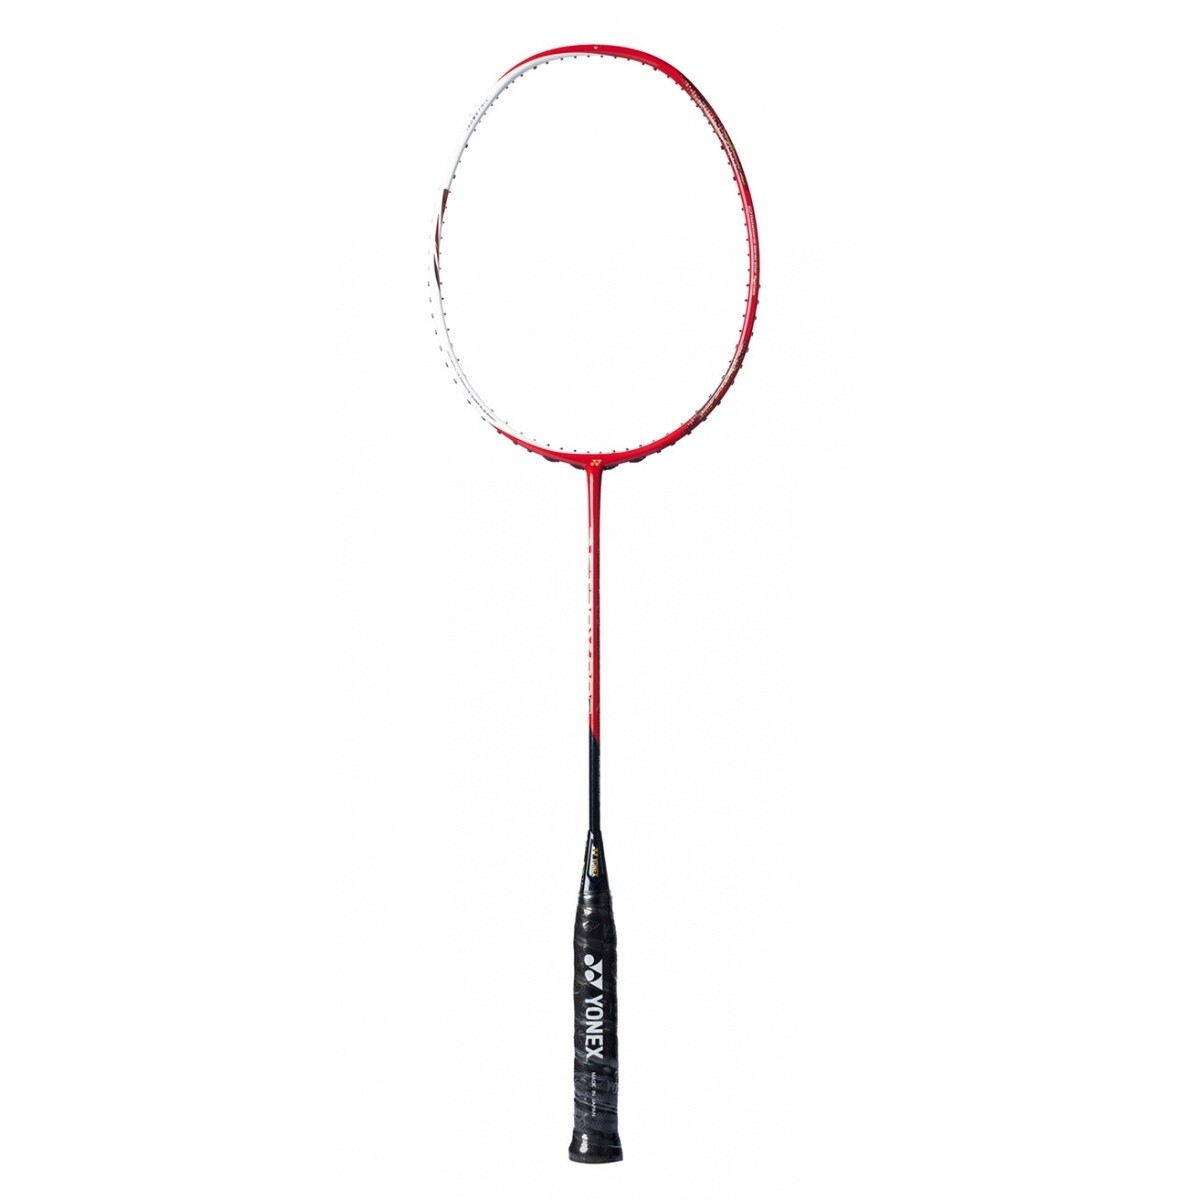 Yonex Astrox 88 S (Skill) Badminton Racket